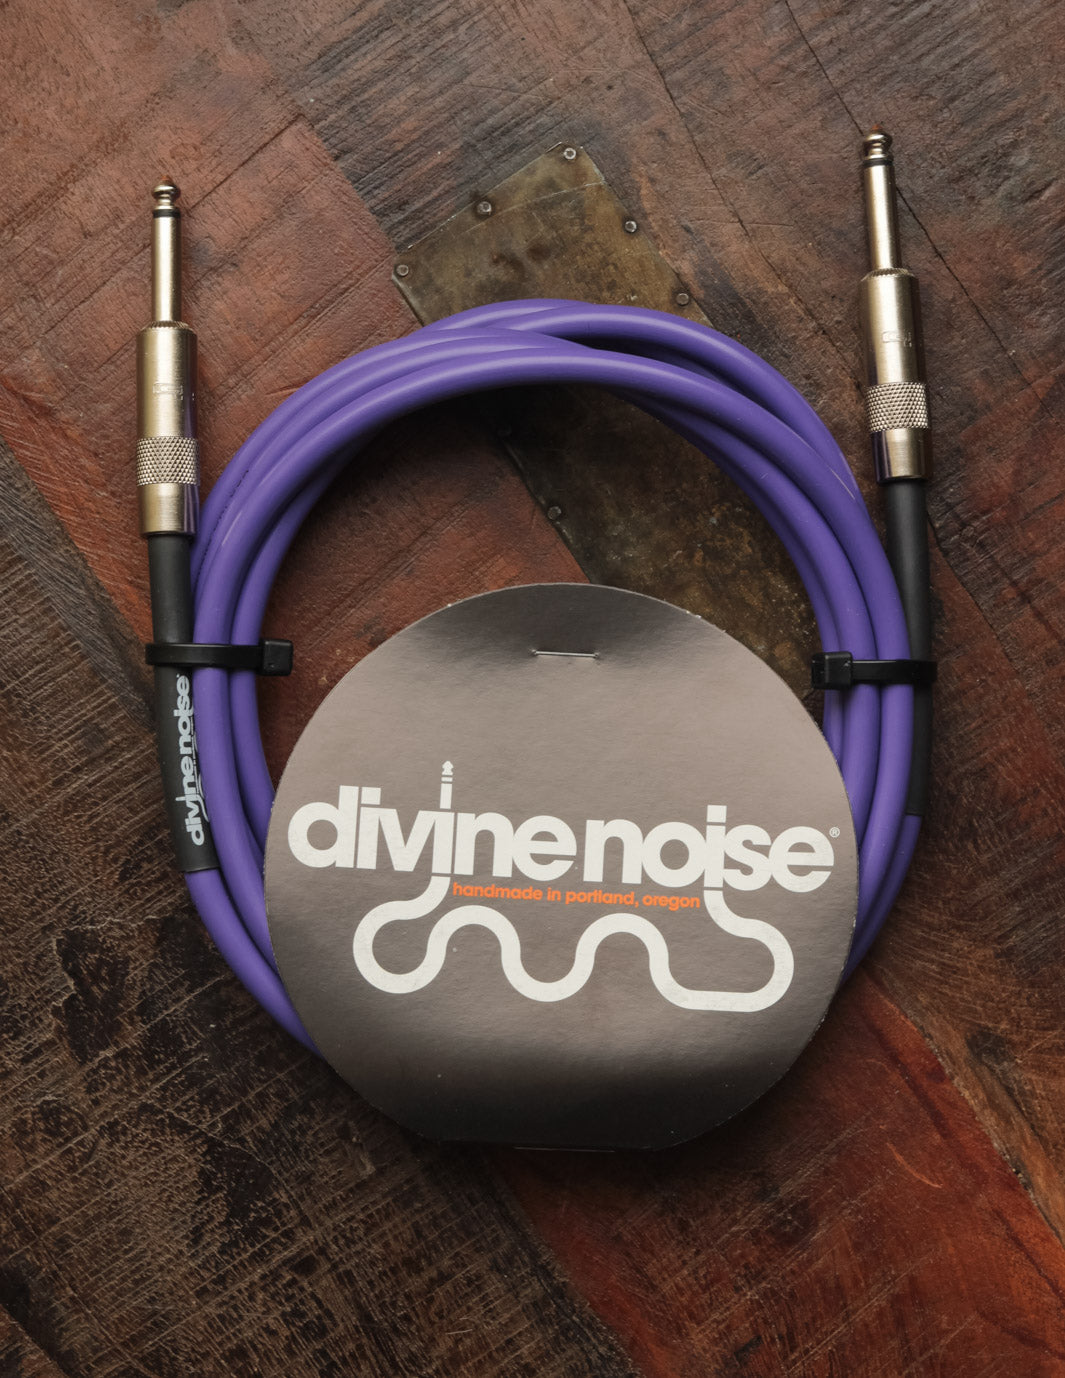 divine noise - handmade cables